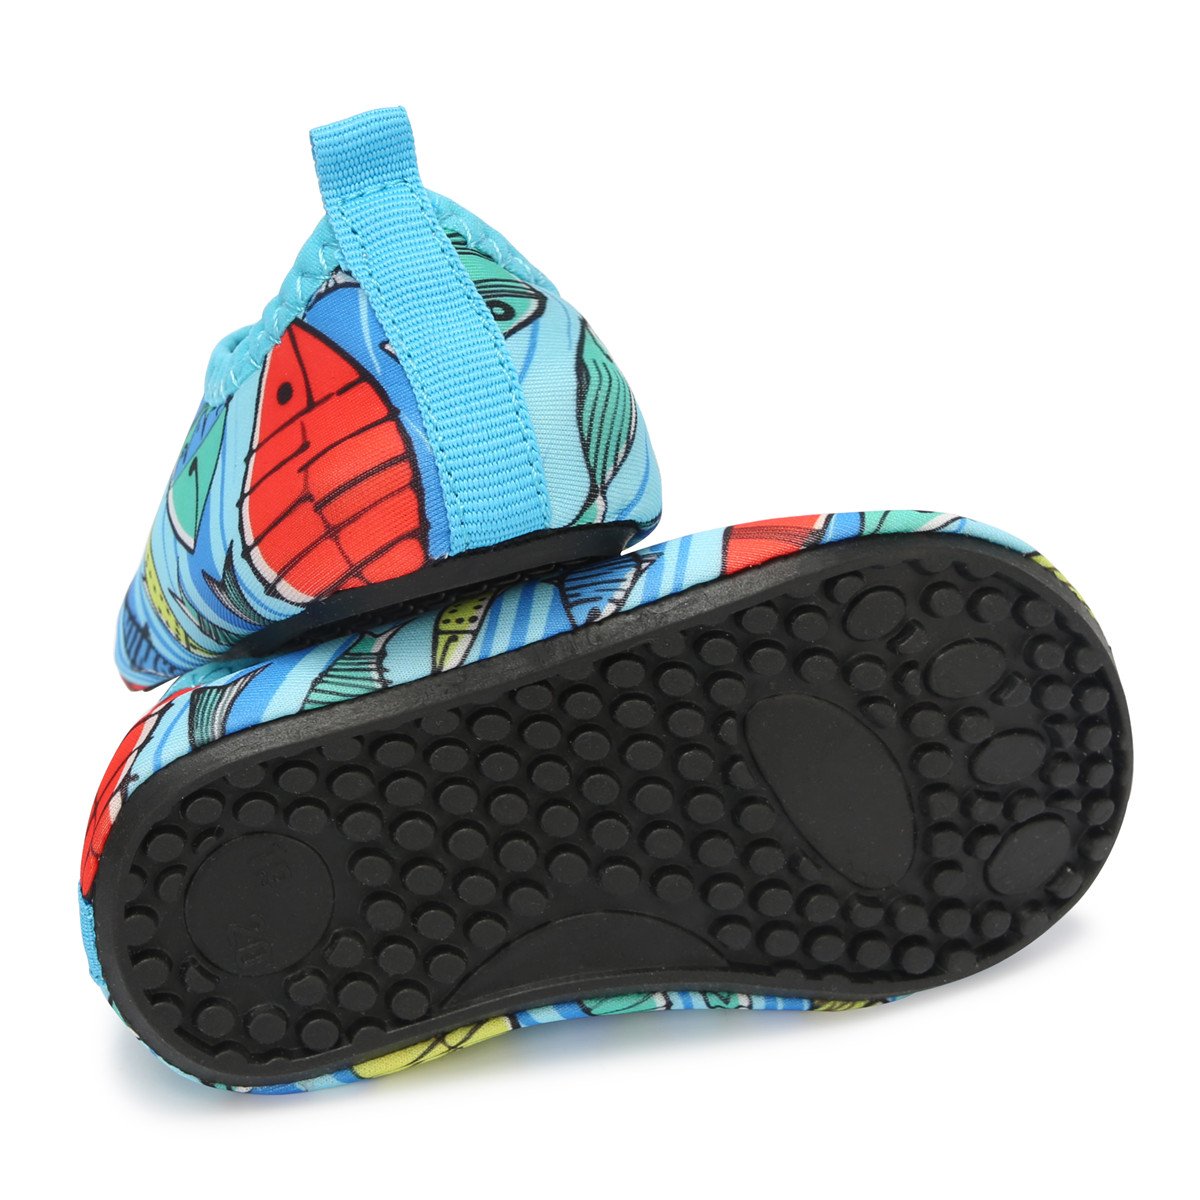 JIASUQI Baby Boys and Girls Barefoot Swim Water Skin Shoes Aqua Socks for Beach Swim Pool